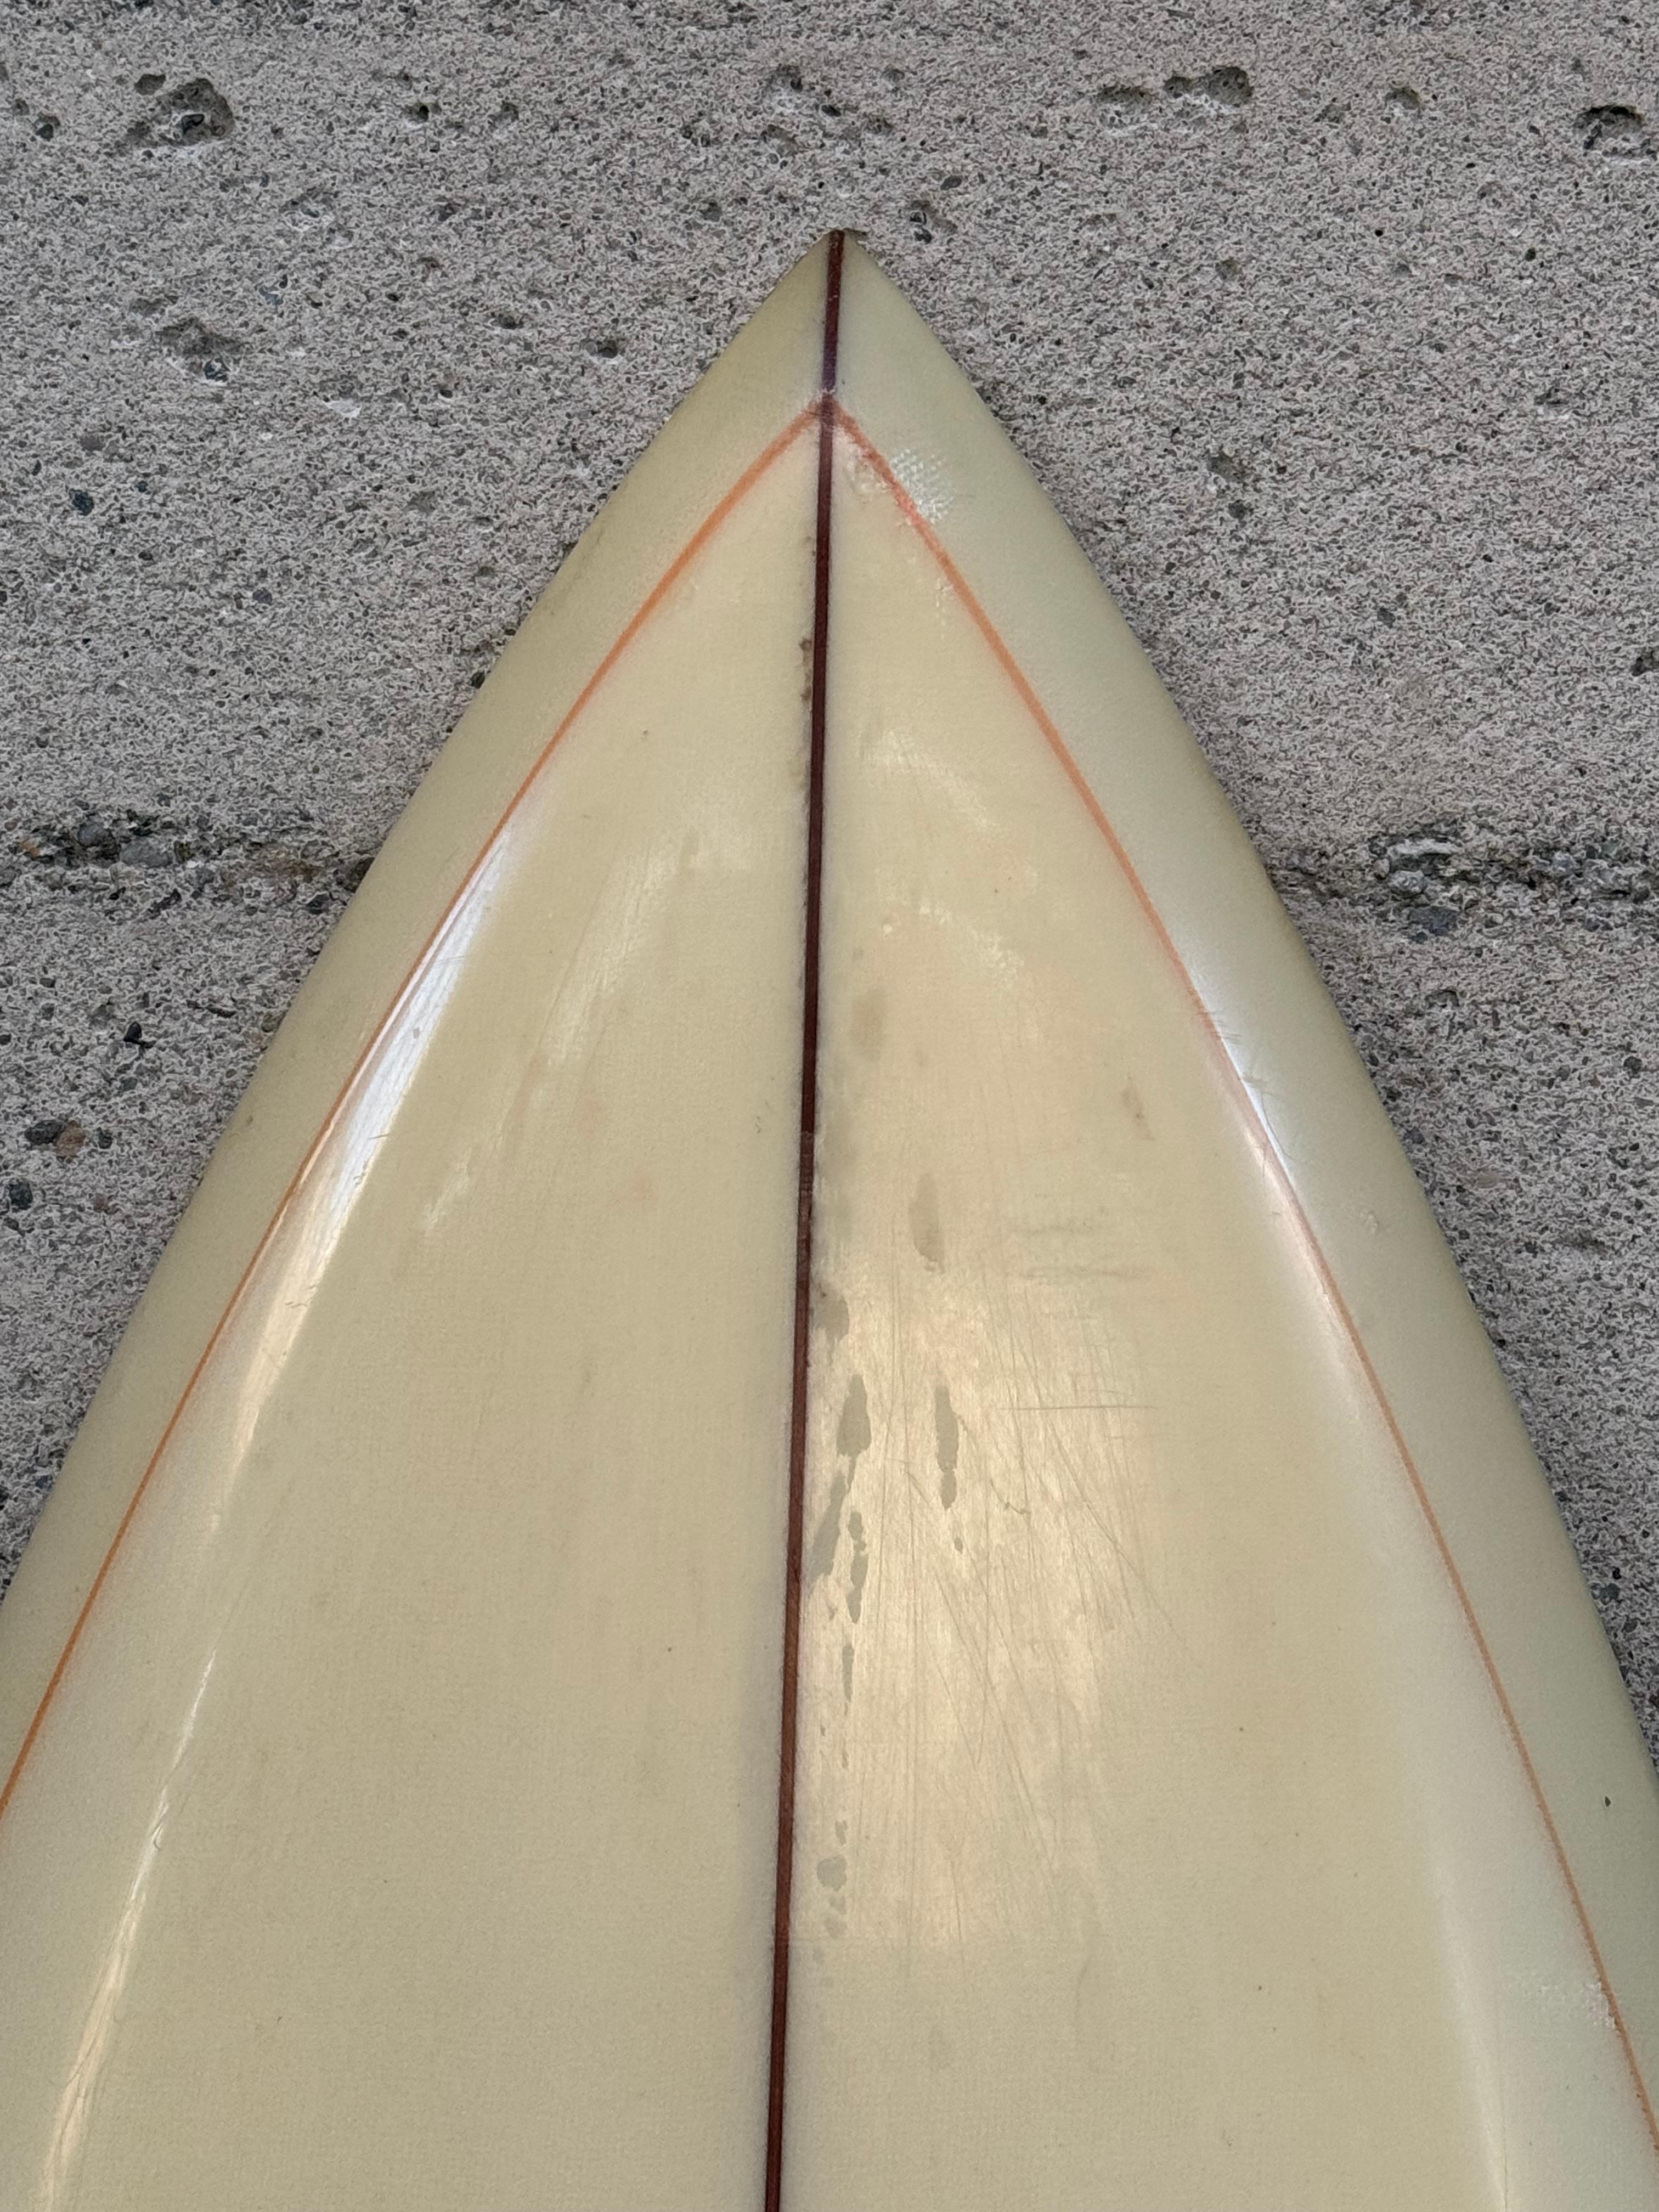 Late 20th Century 1970s Joey Thomas Single Fin Surfboard an Santa Cruz Surf History Artifact For Sale